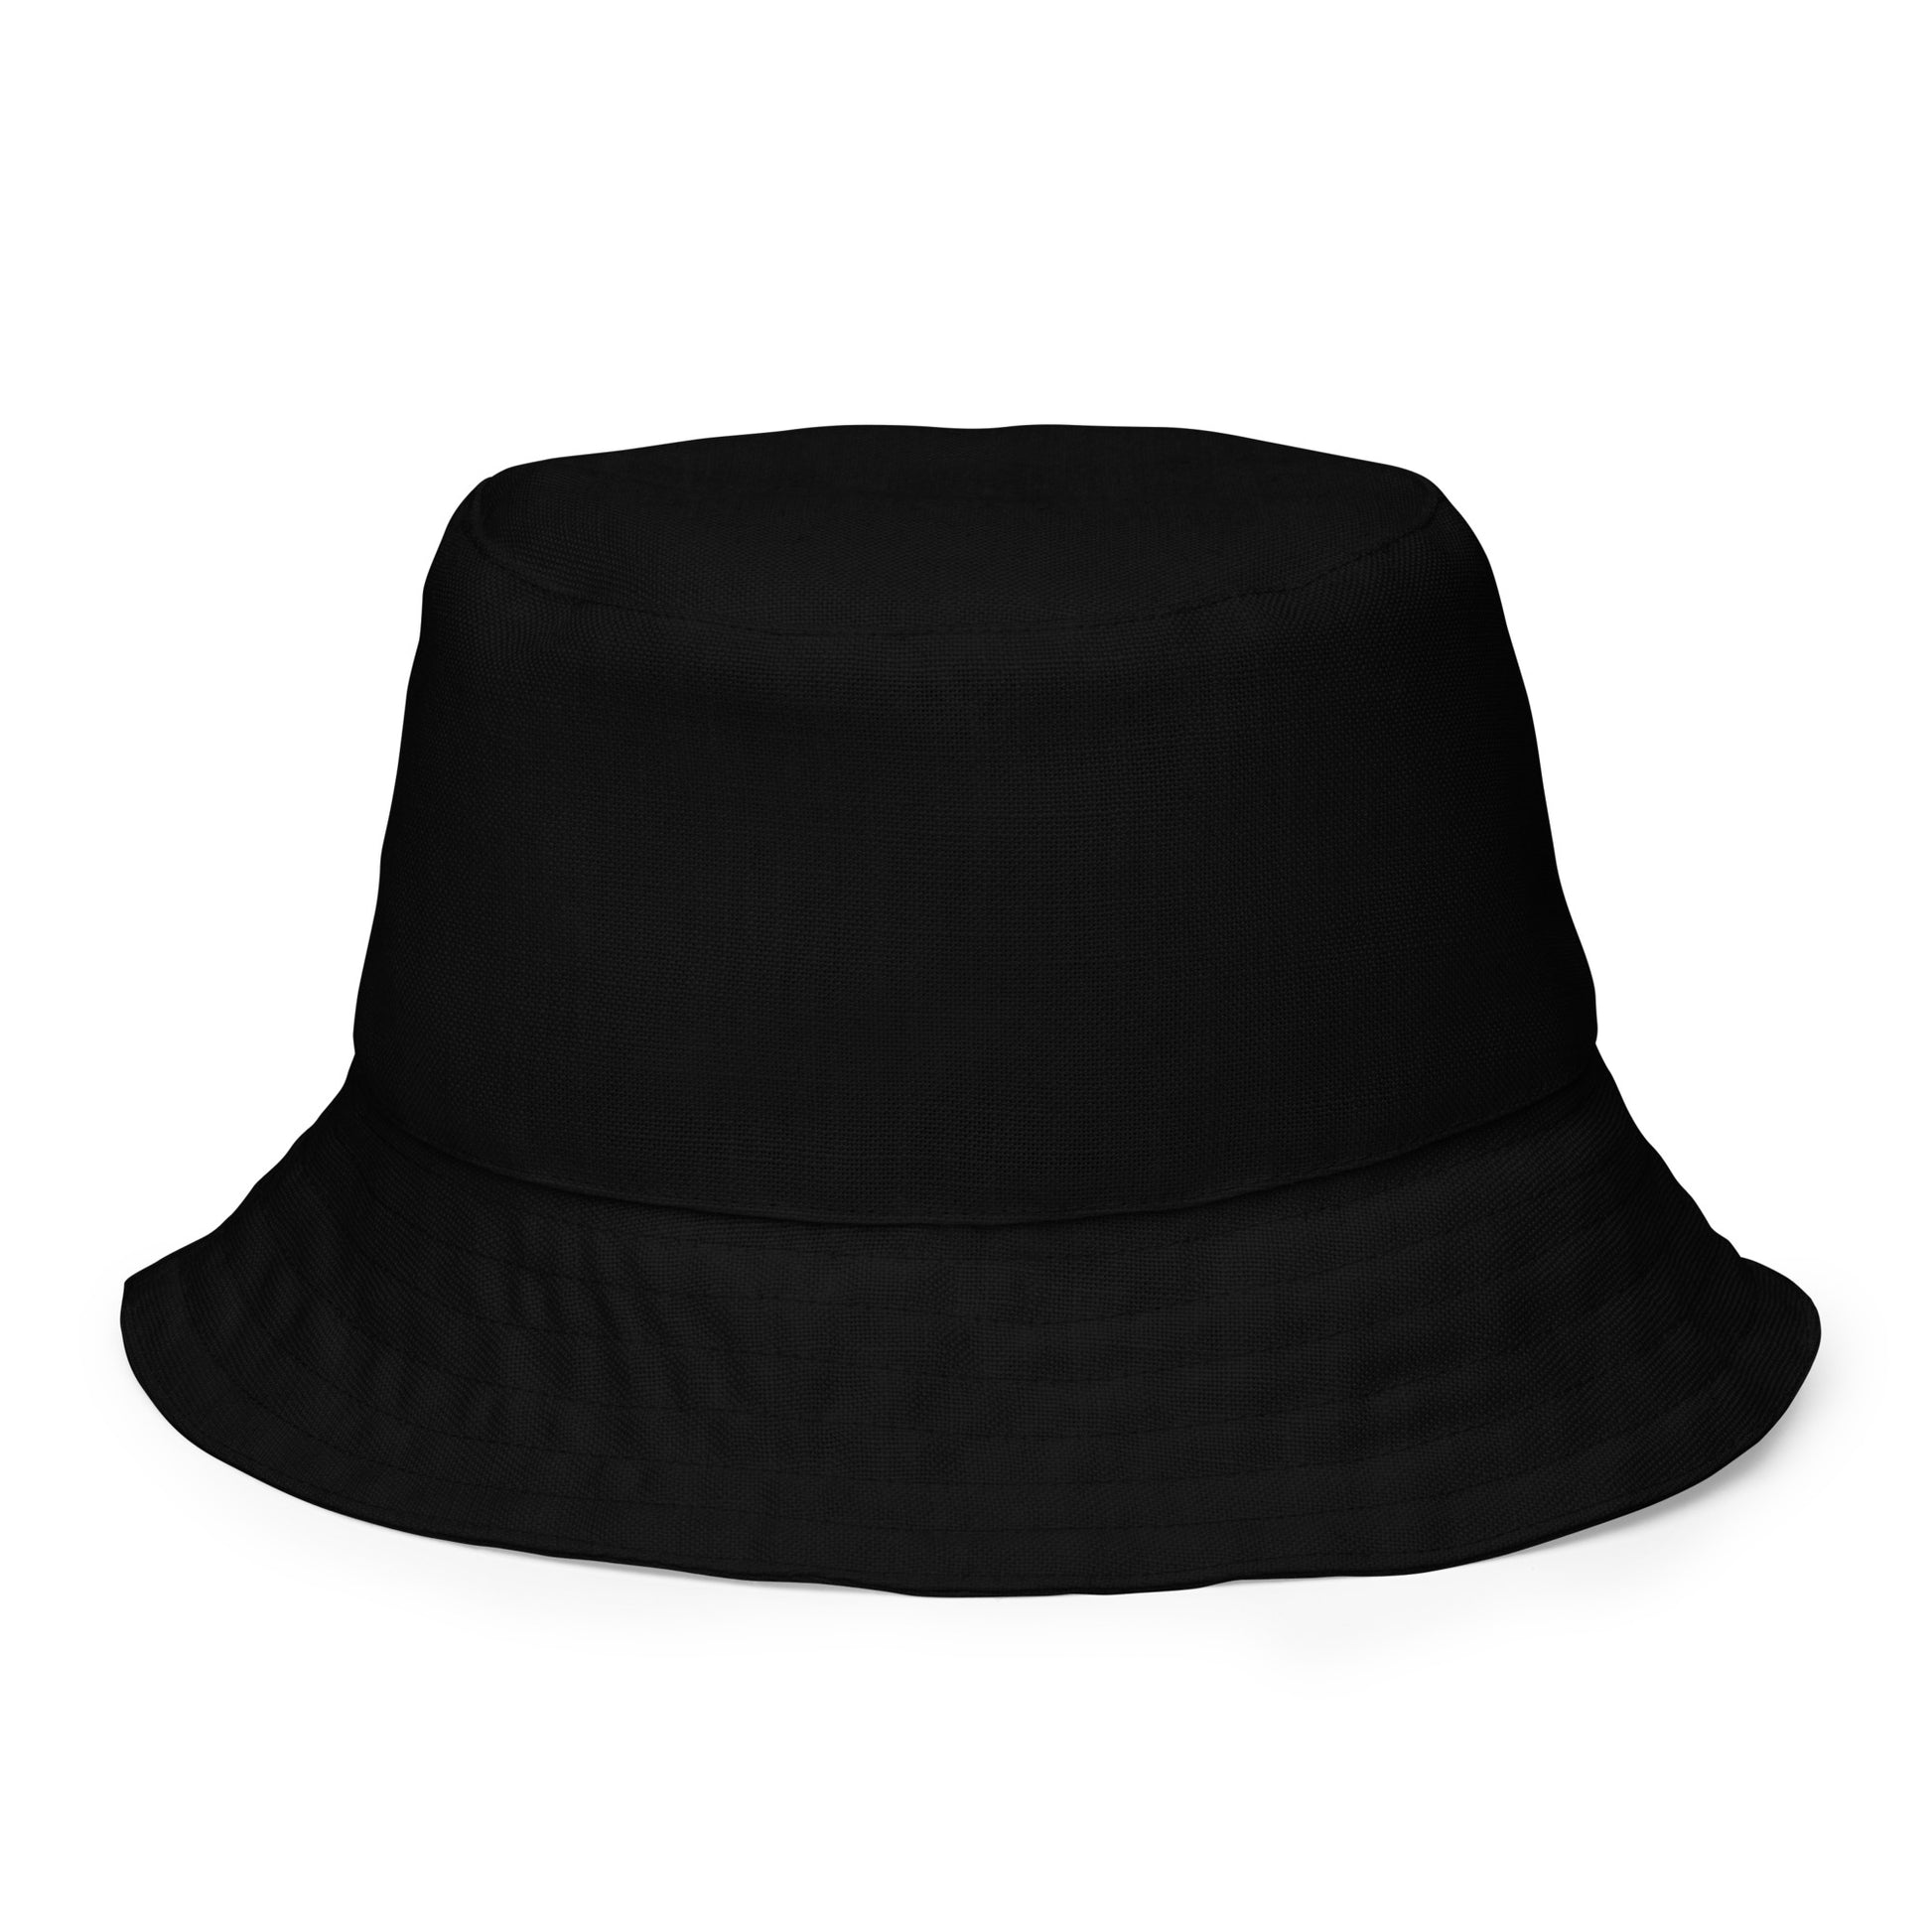 Organic Negrow Hat / Kyrie Irving Hat / Organic Negrow Bucket Hat